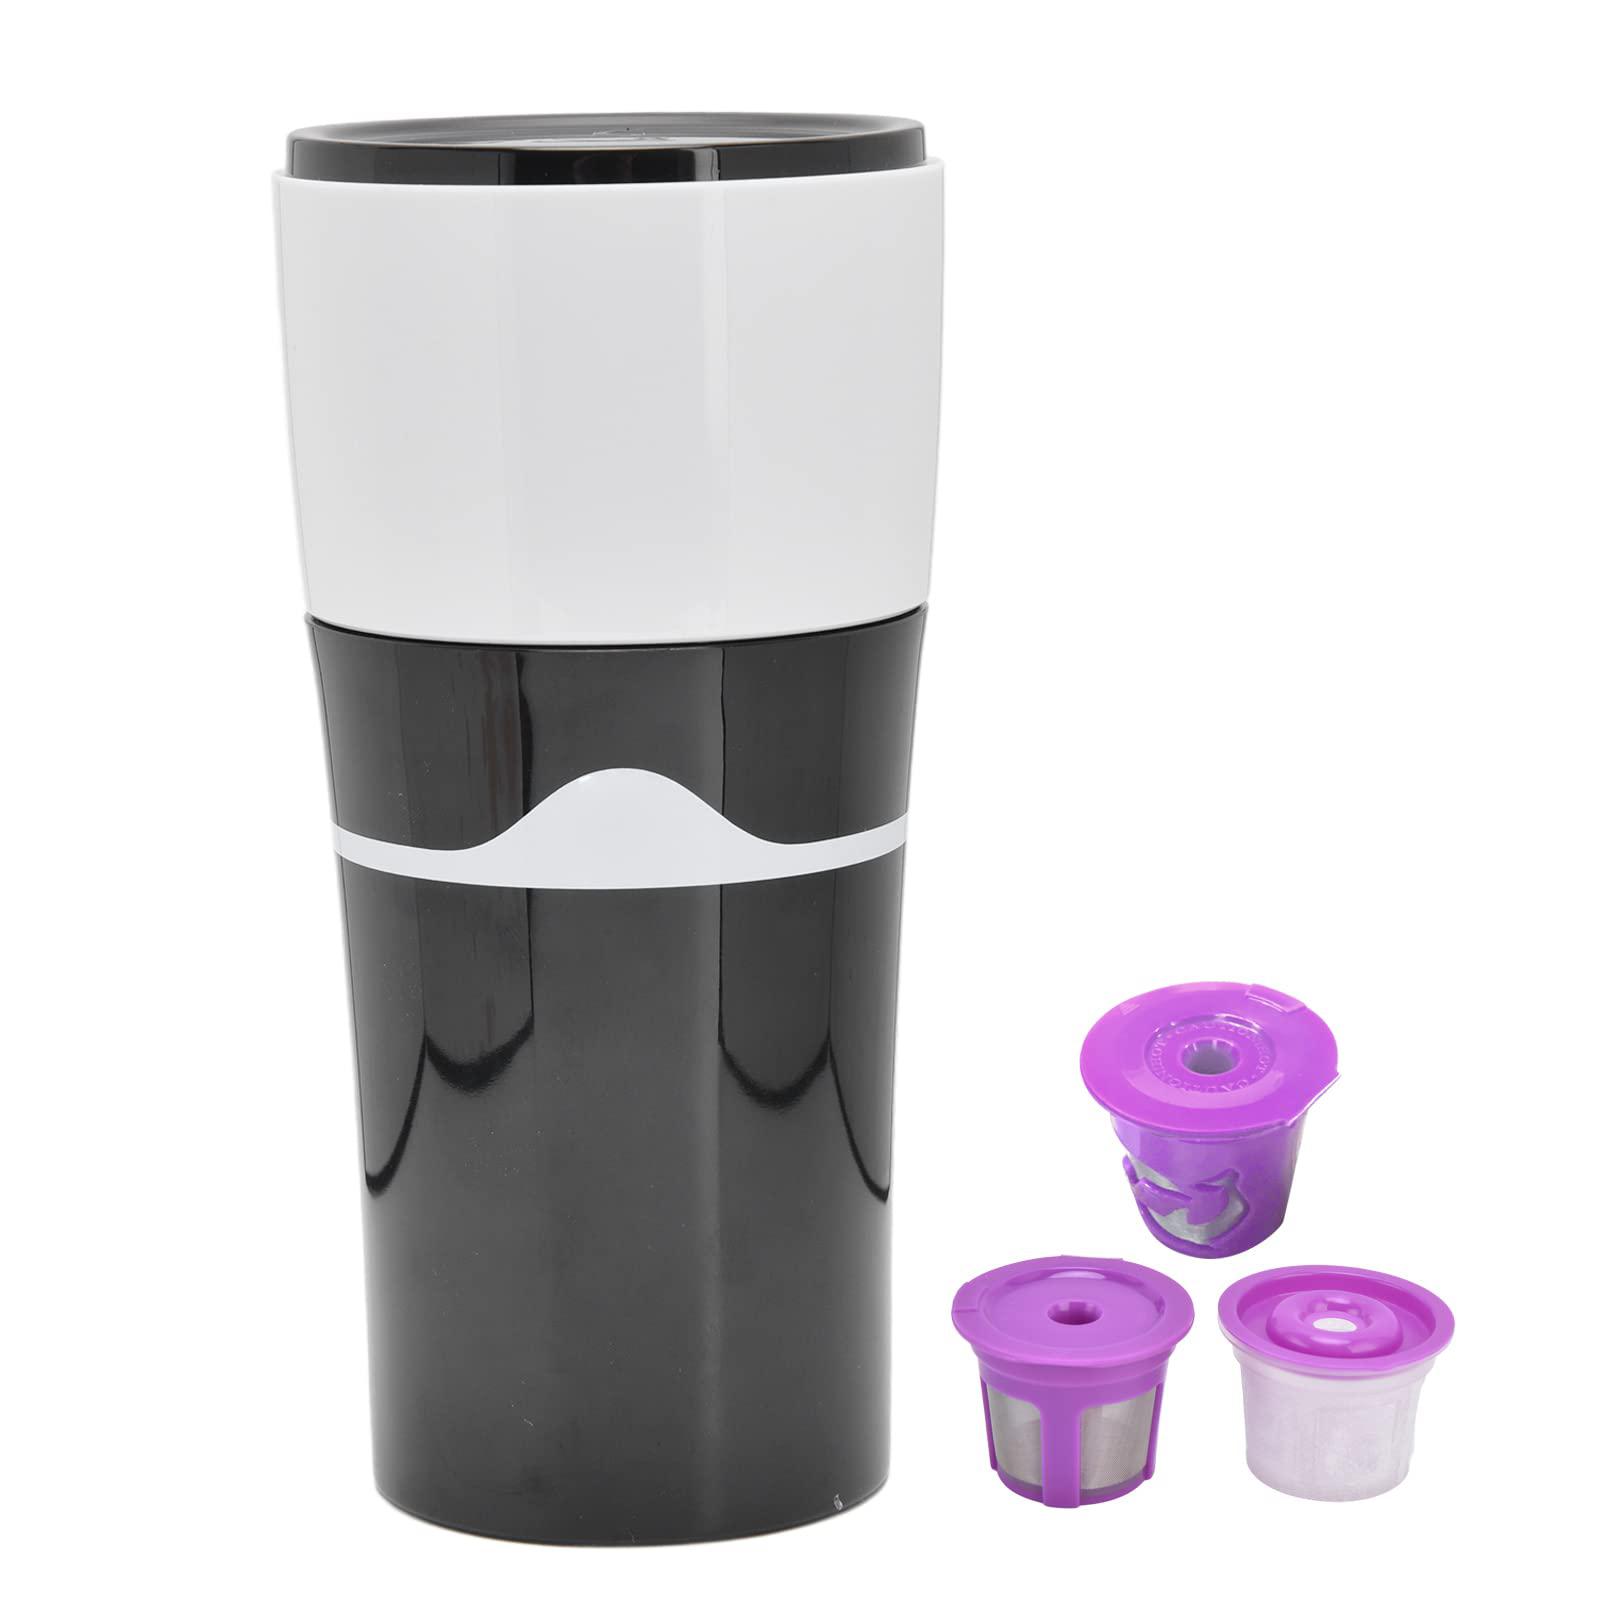 01 02 015 portable coffee maker,k cup coffee machine, single serve drip coffee maker,360 degree side leakage prevention, manual drip co